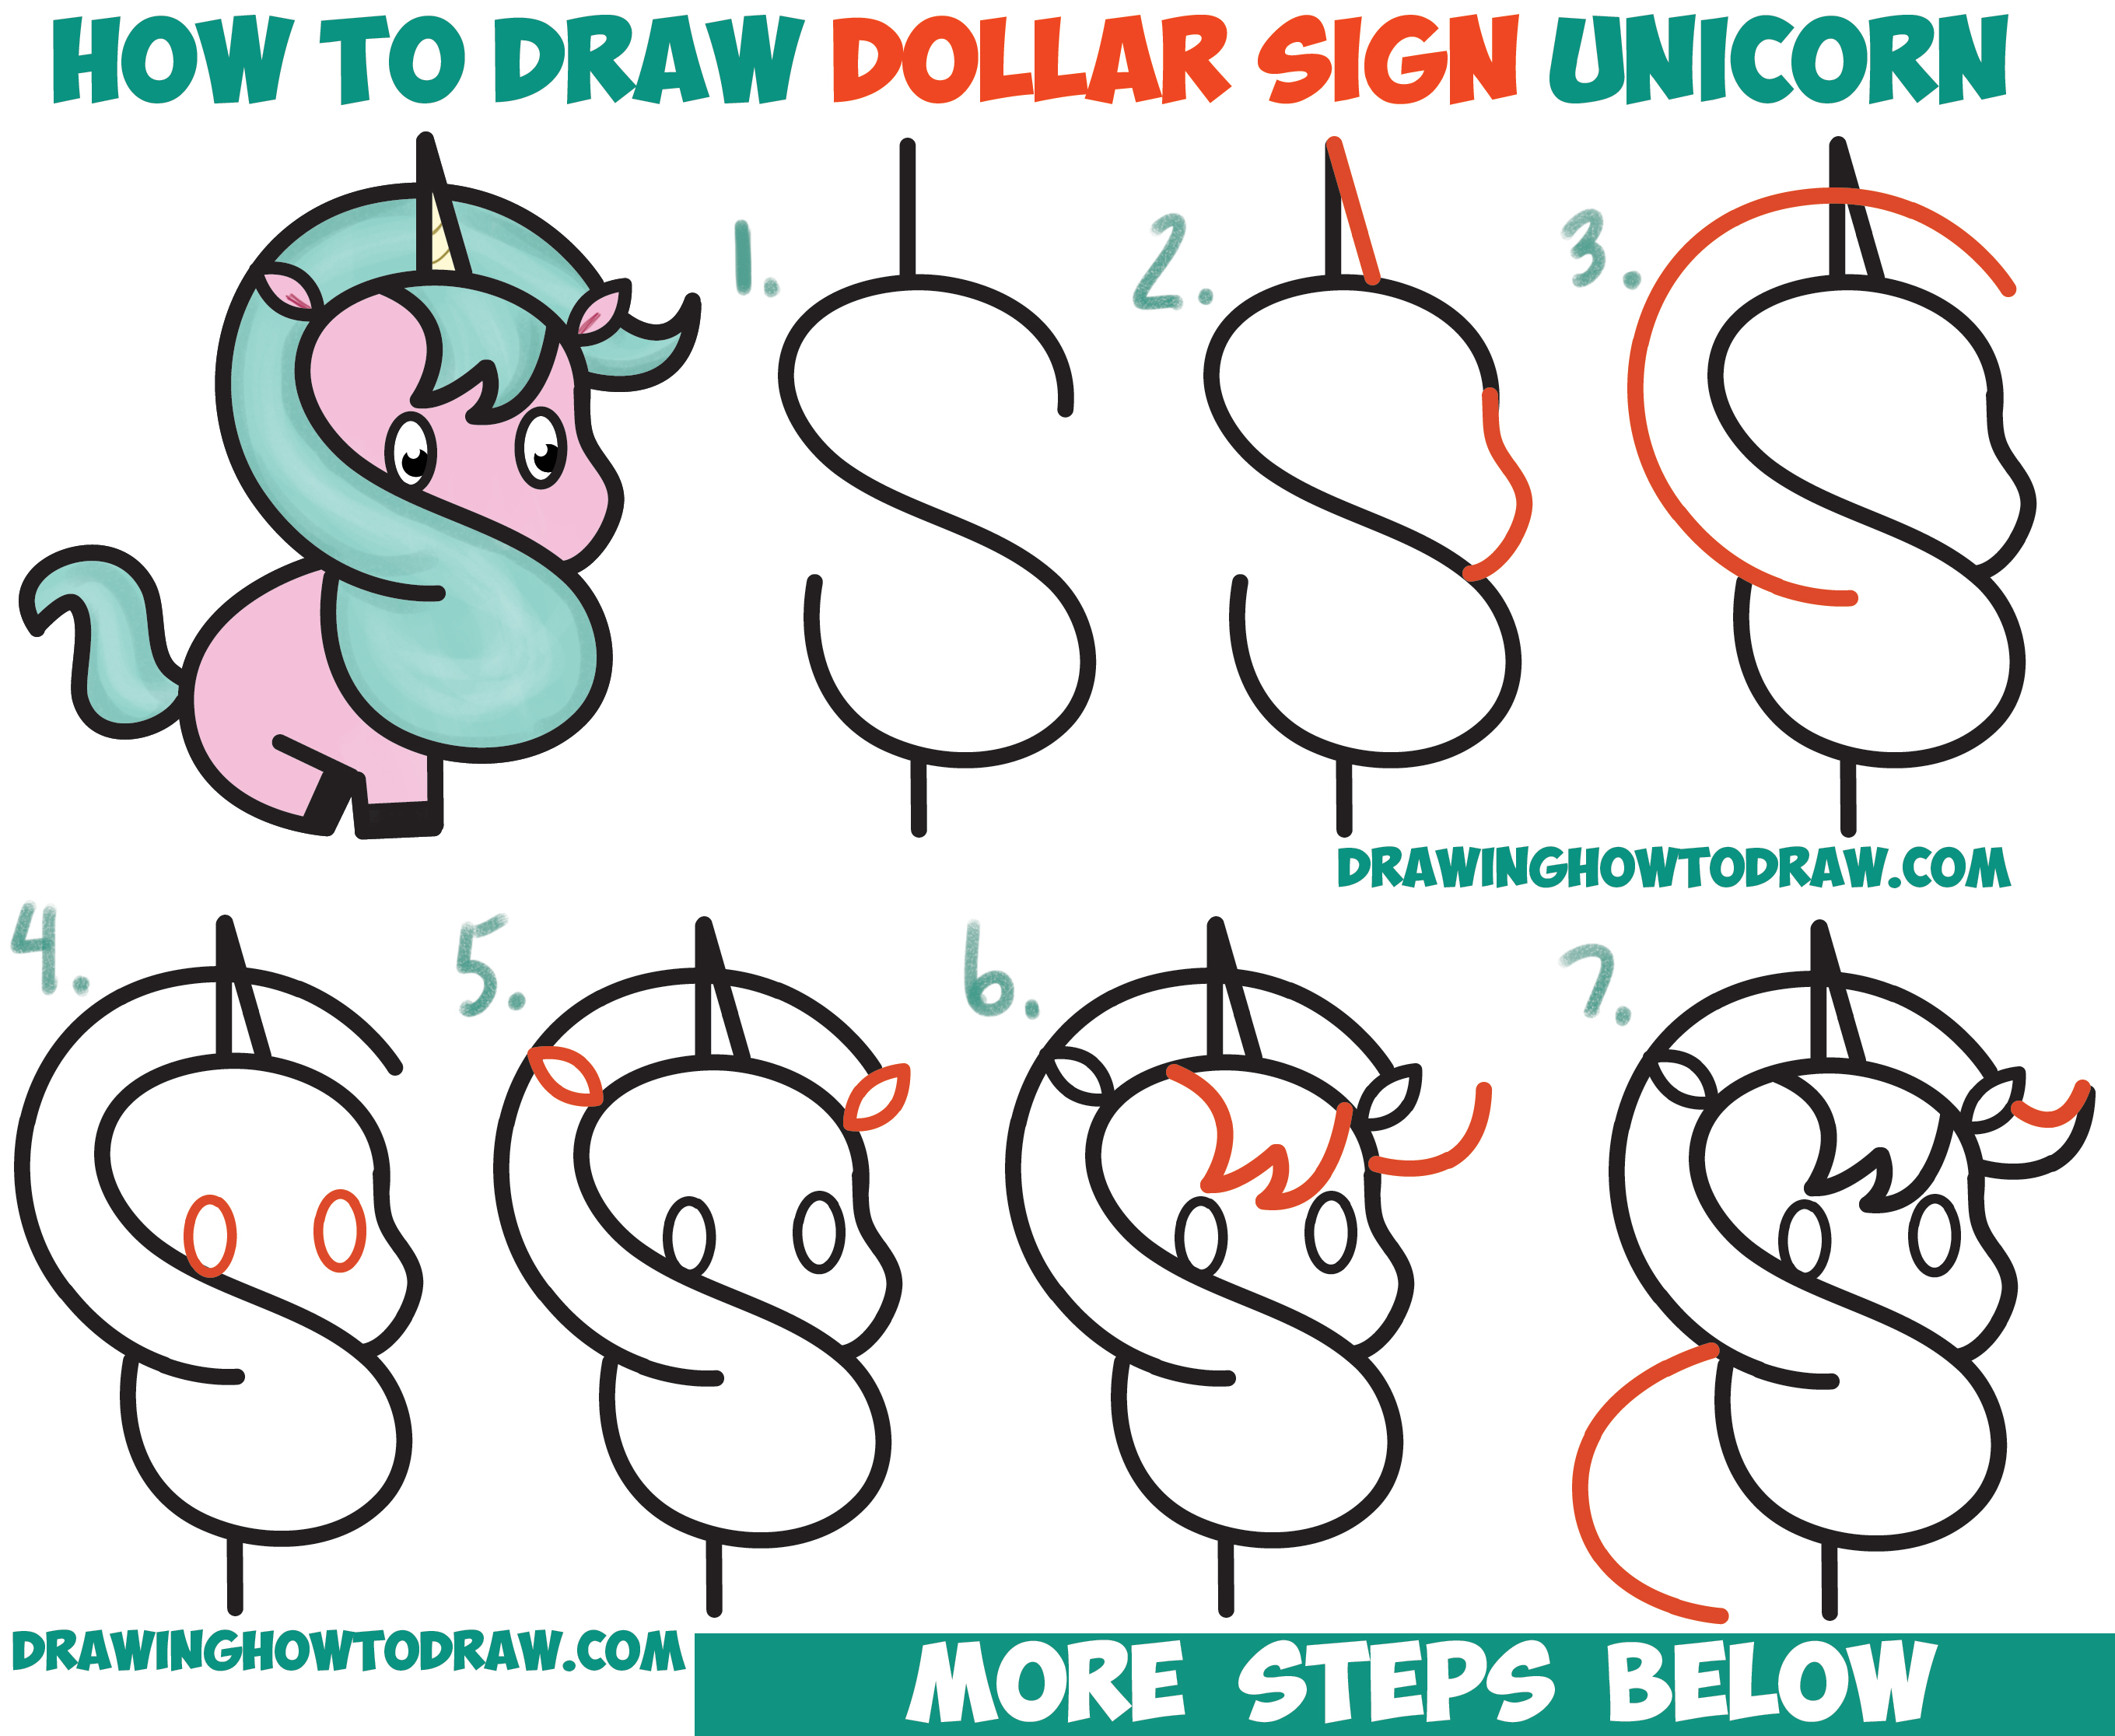 How to Draw a Cute Cartoon Unicorn (Kawaii) from a Dollar Sign Easy